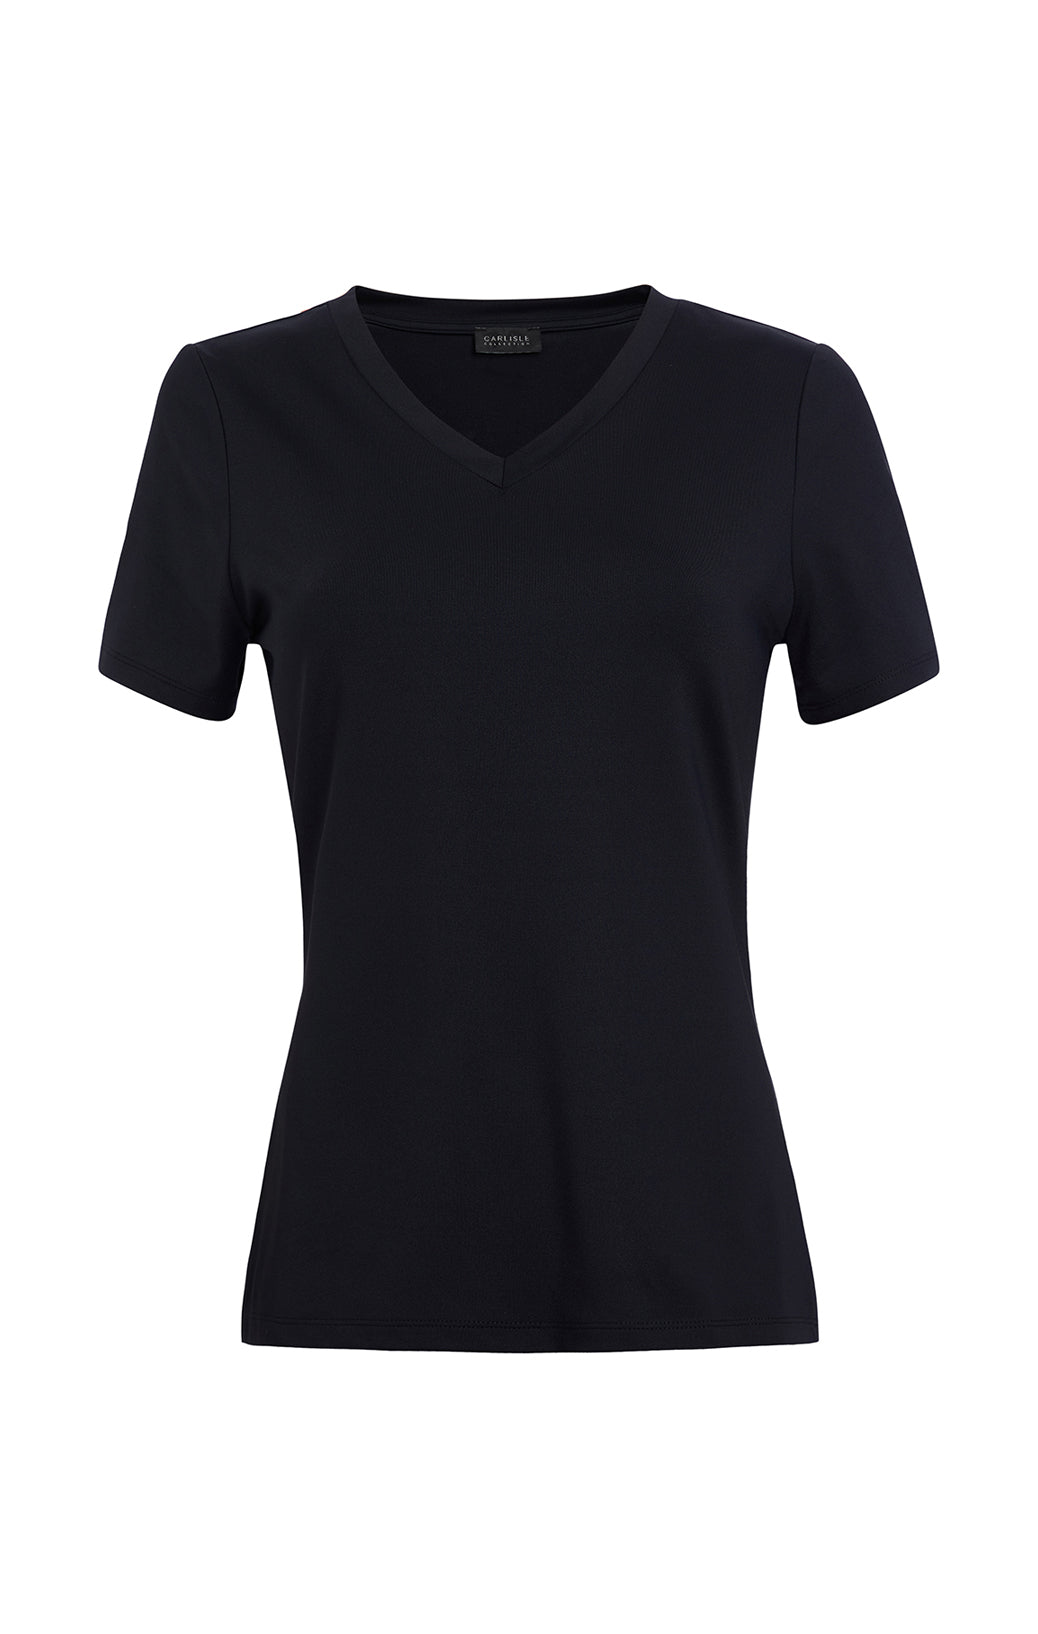 Paradigm-Wht - Fitted White V-Neck Tee Shirt - Product Image